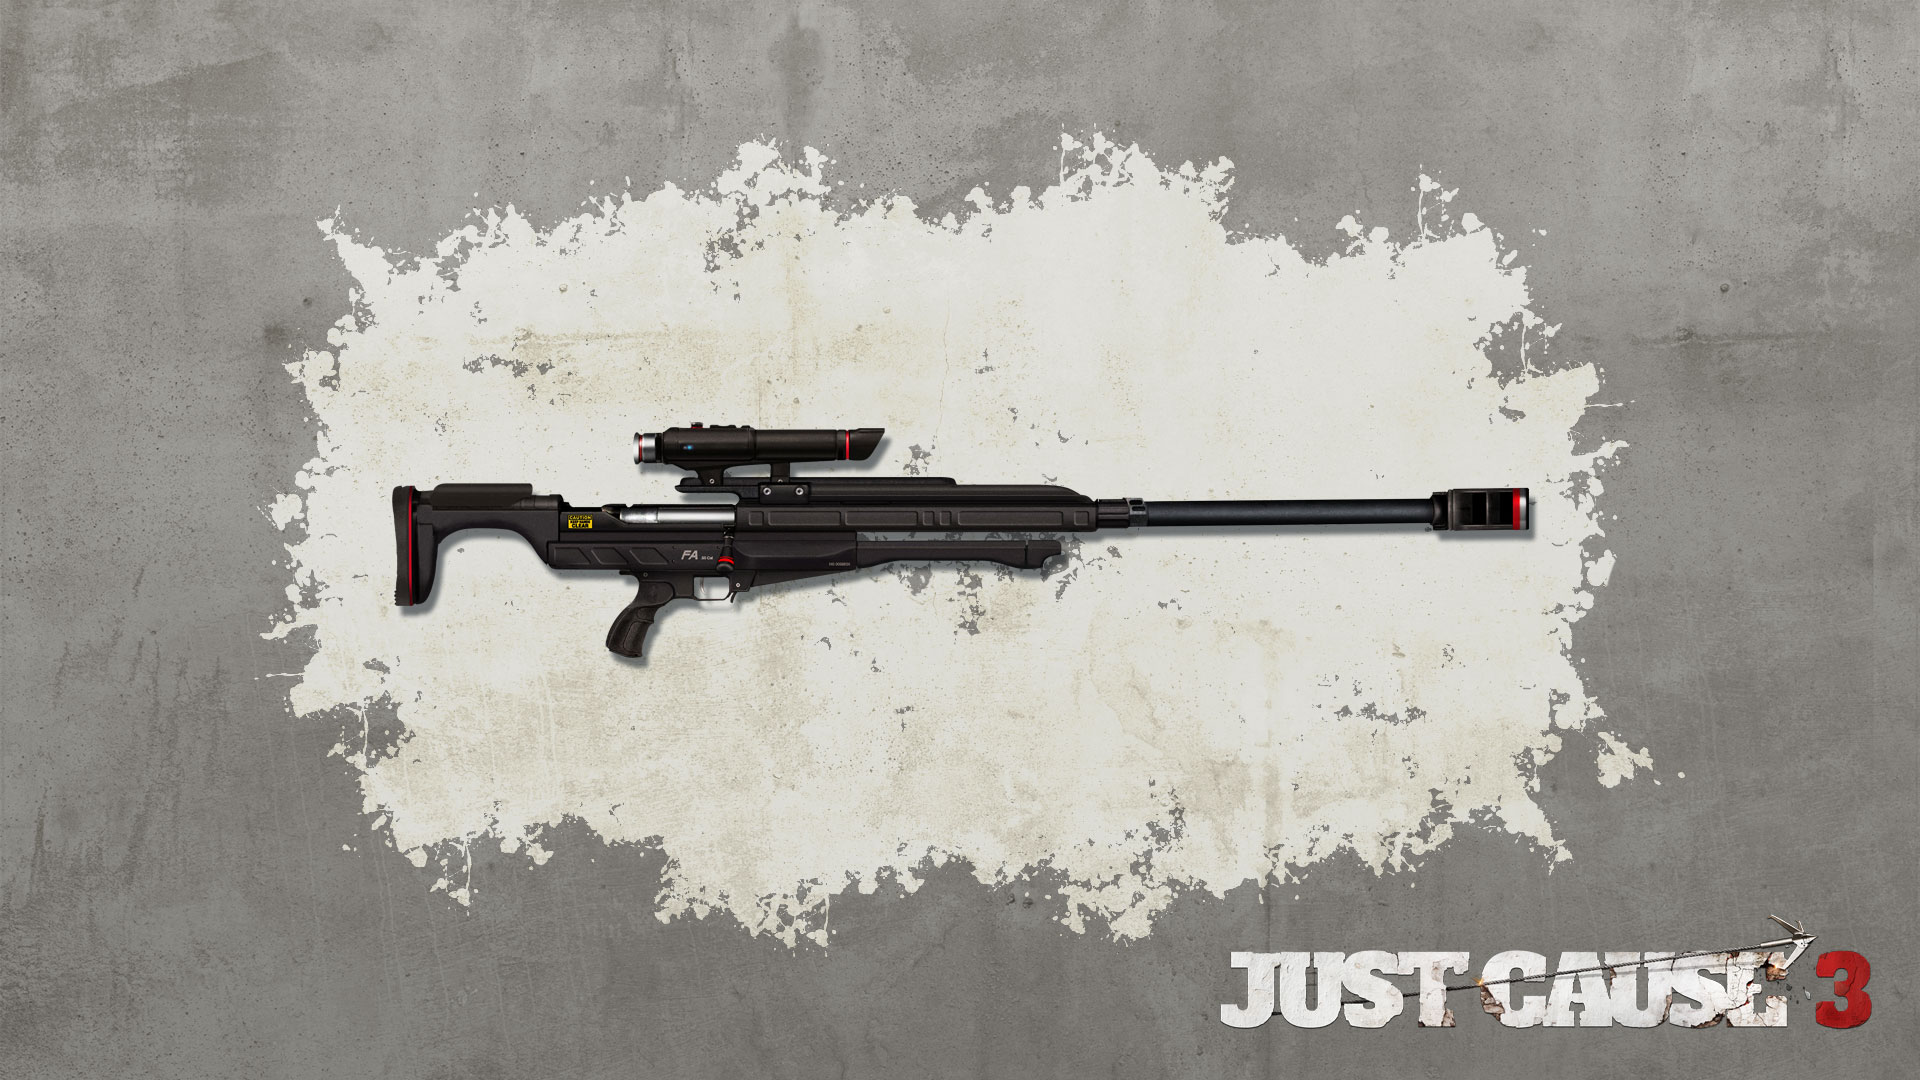 Just Cause 3 - Final Argument Sniper Rifle DLC Steam CD Key, $1.67